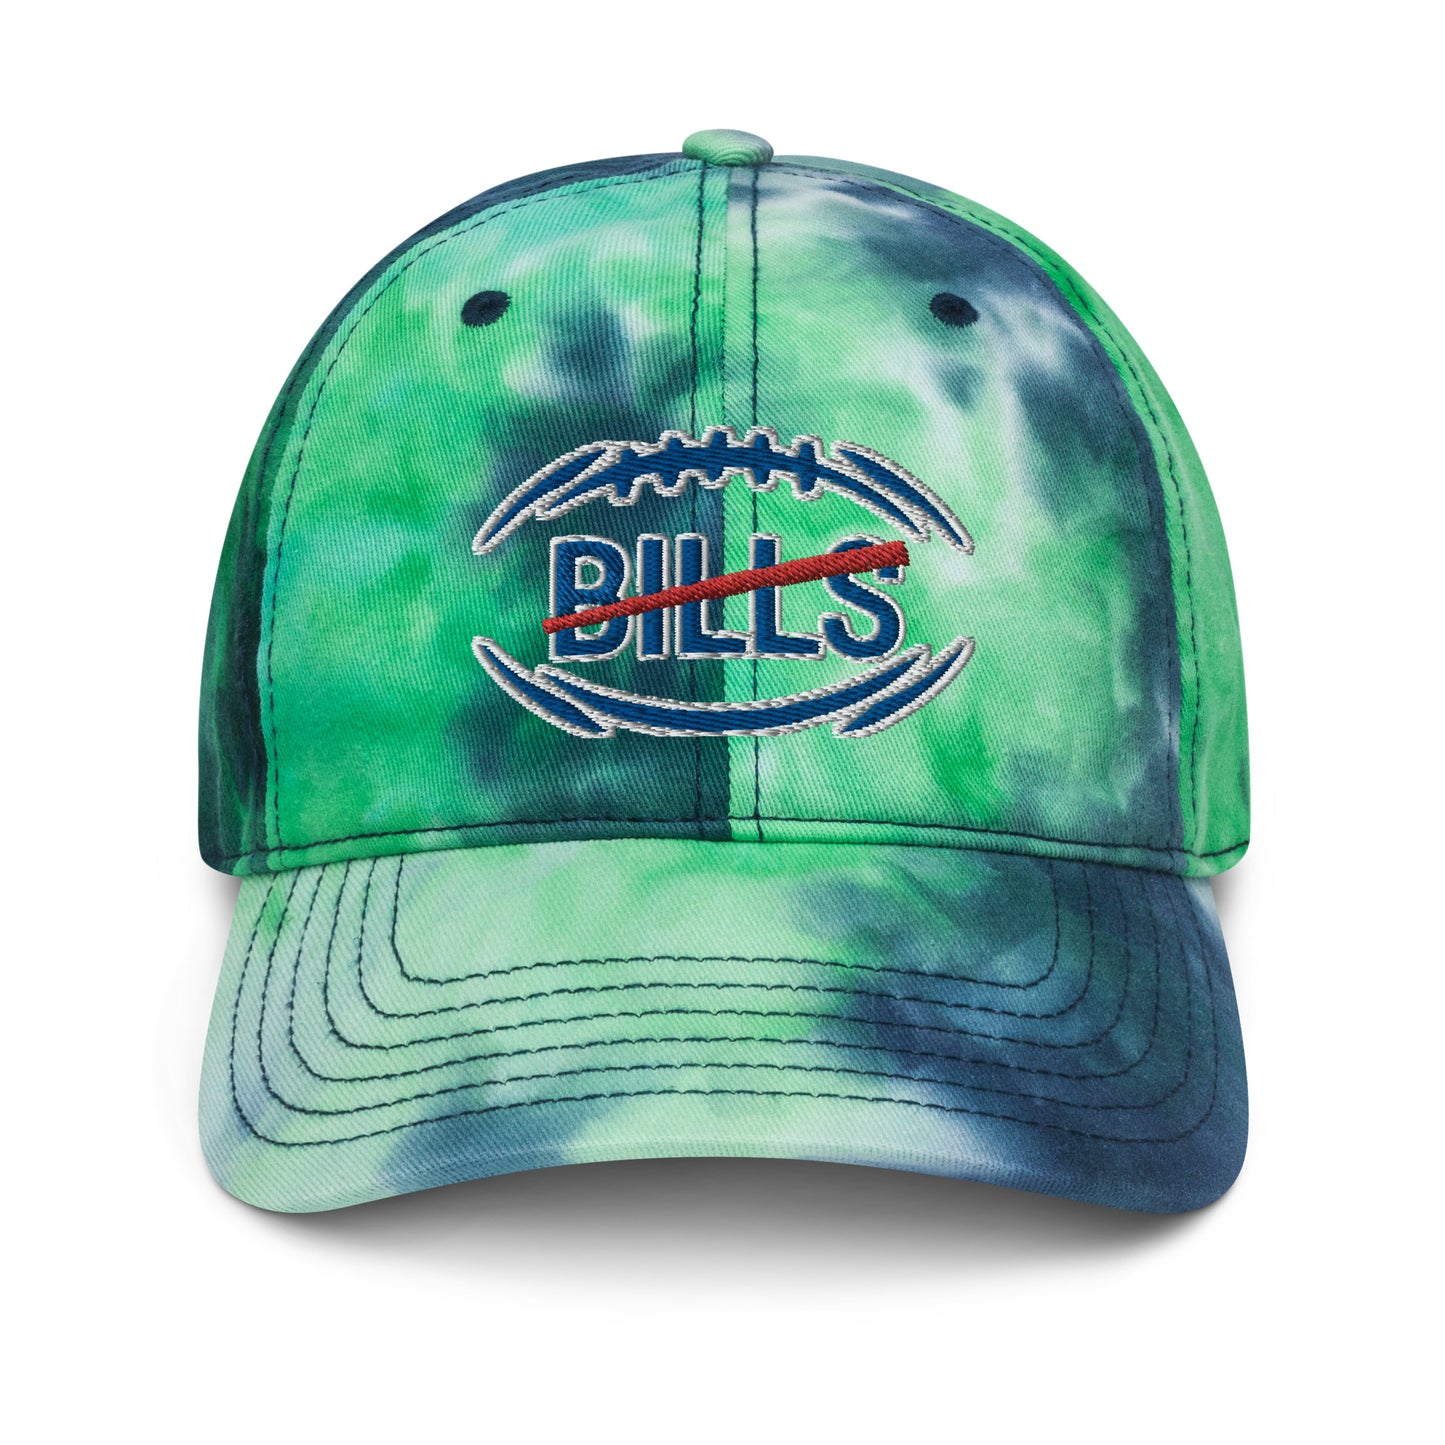 Bills Intercept Cancer hat / Buffalo bills Tie dye hat